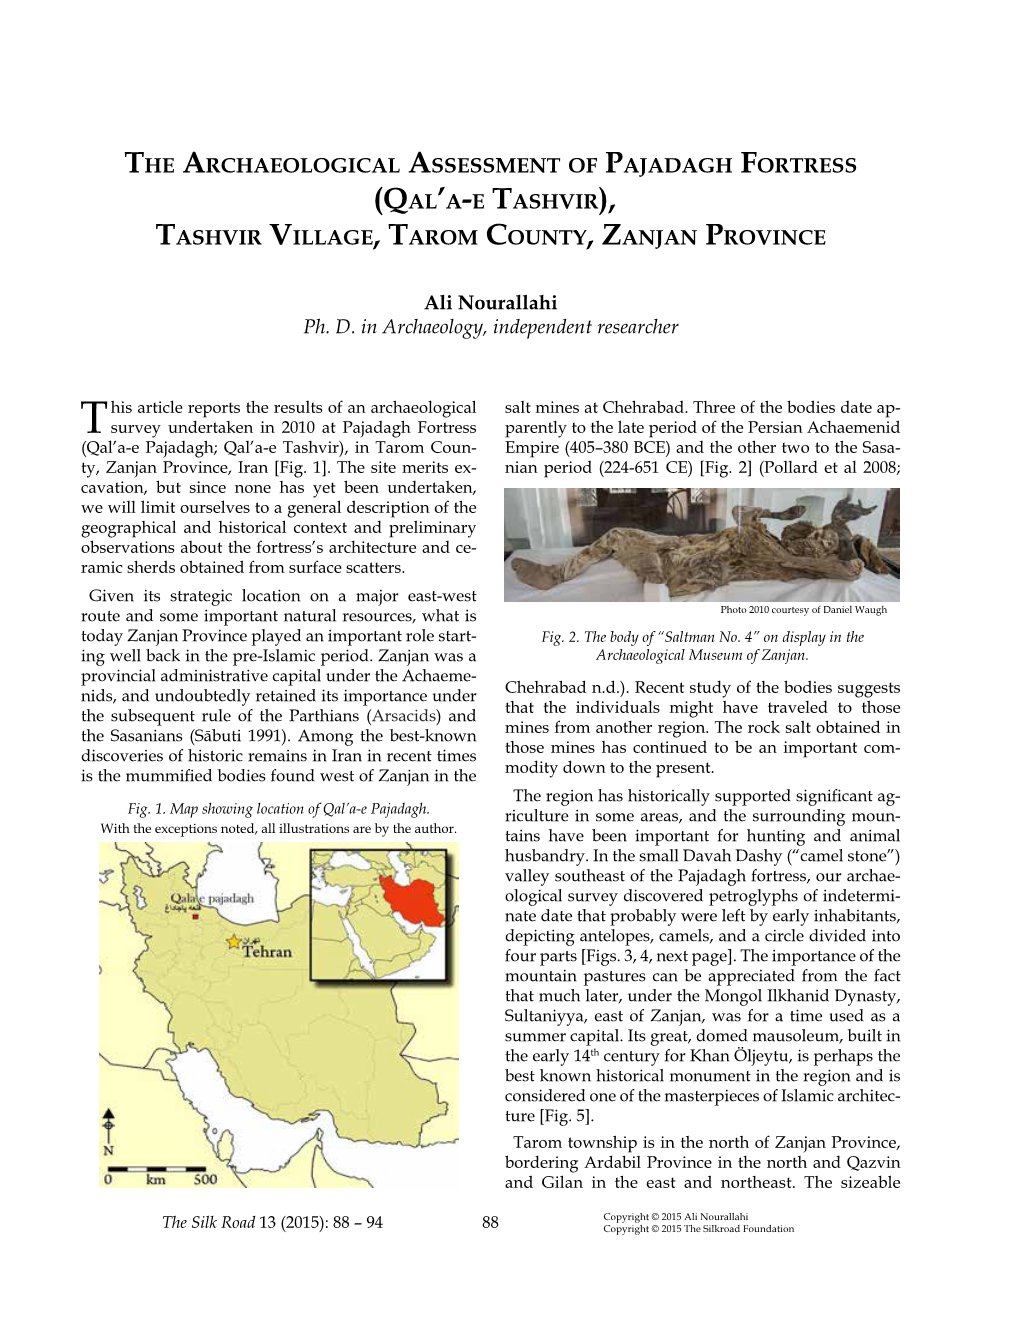 The Archaeological Assessment of Pajadagh Fortress (Qal’A-E Tashvir), Tashvir Village, Tarom County, Zanjan Province